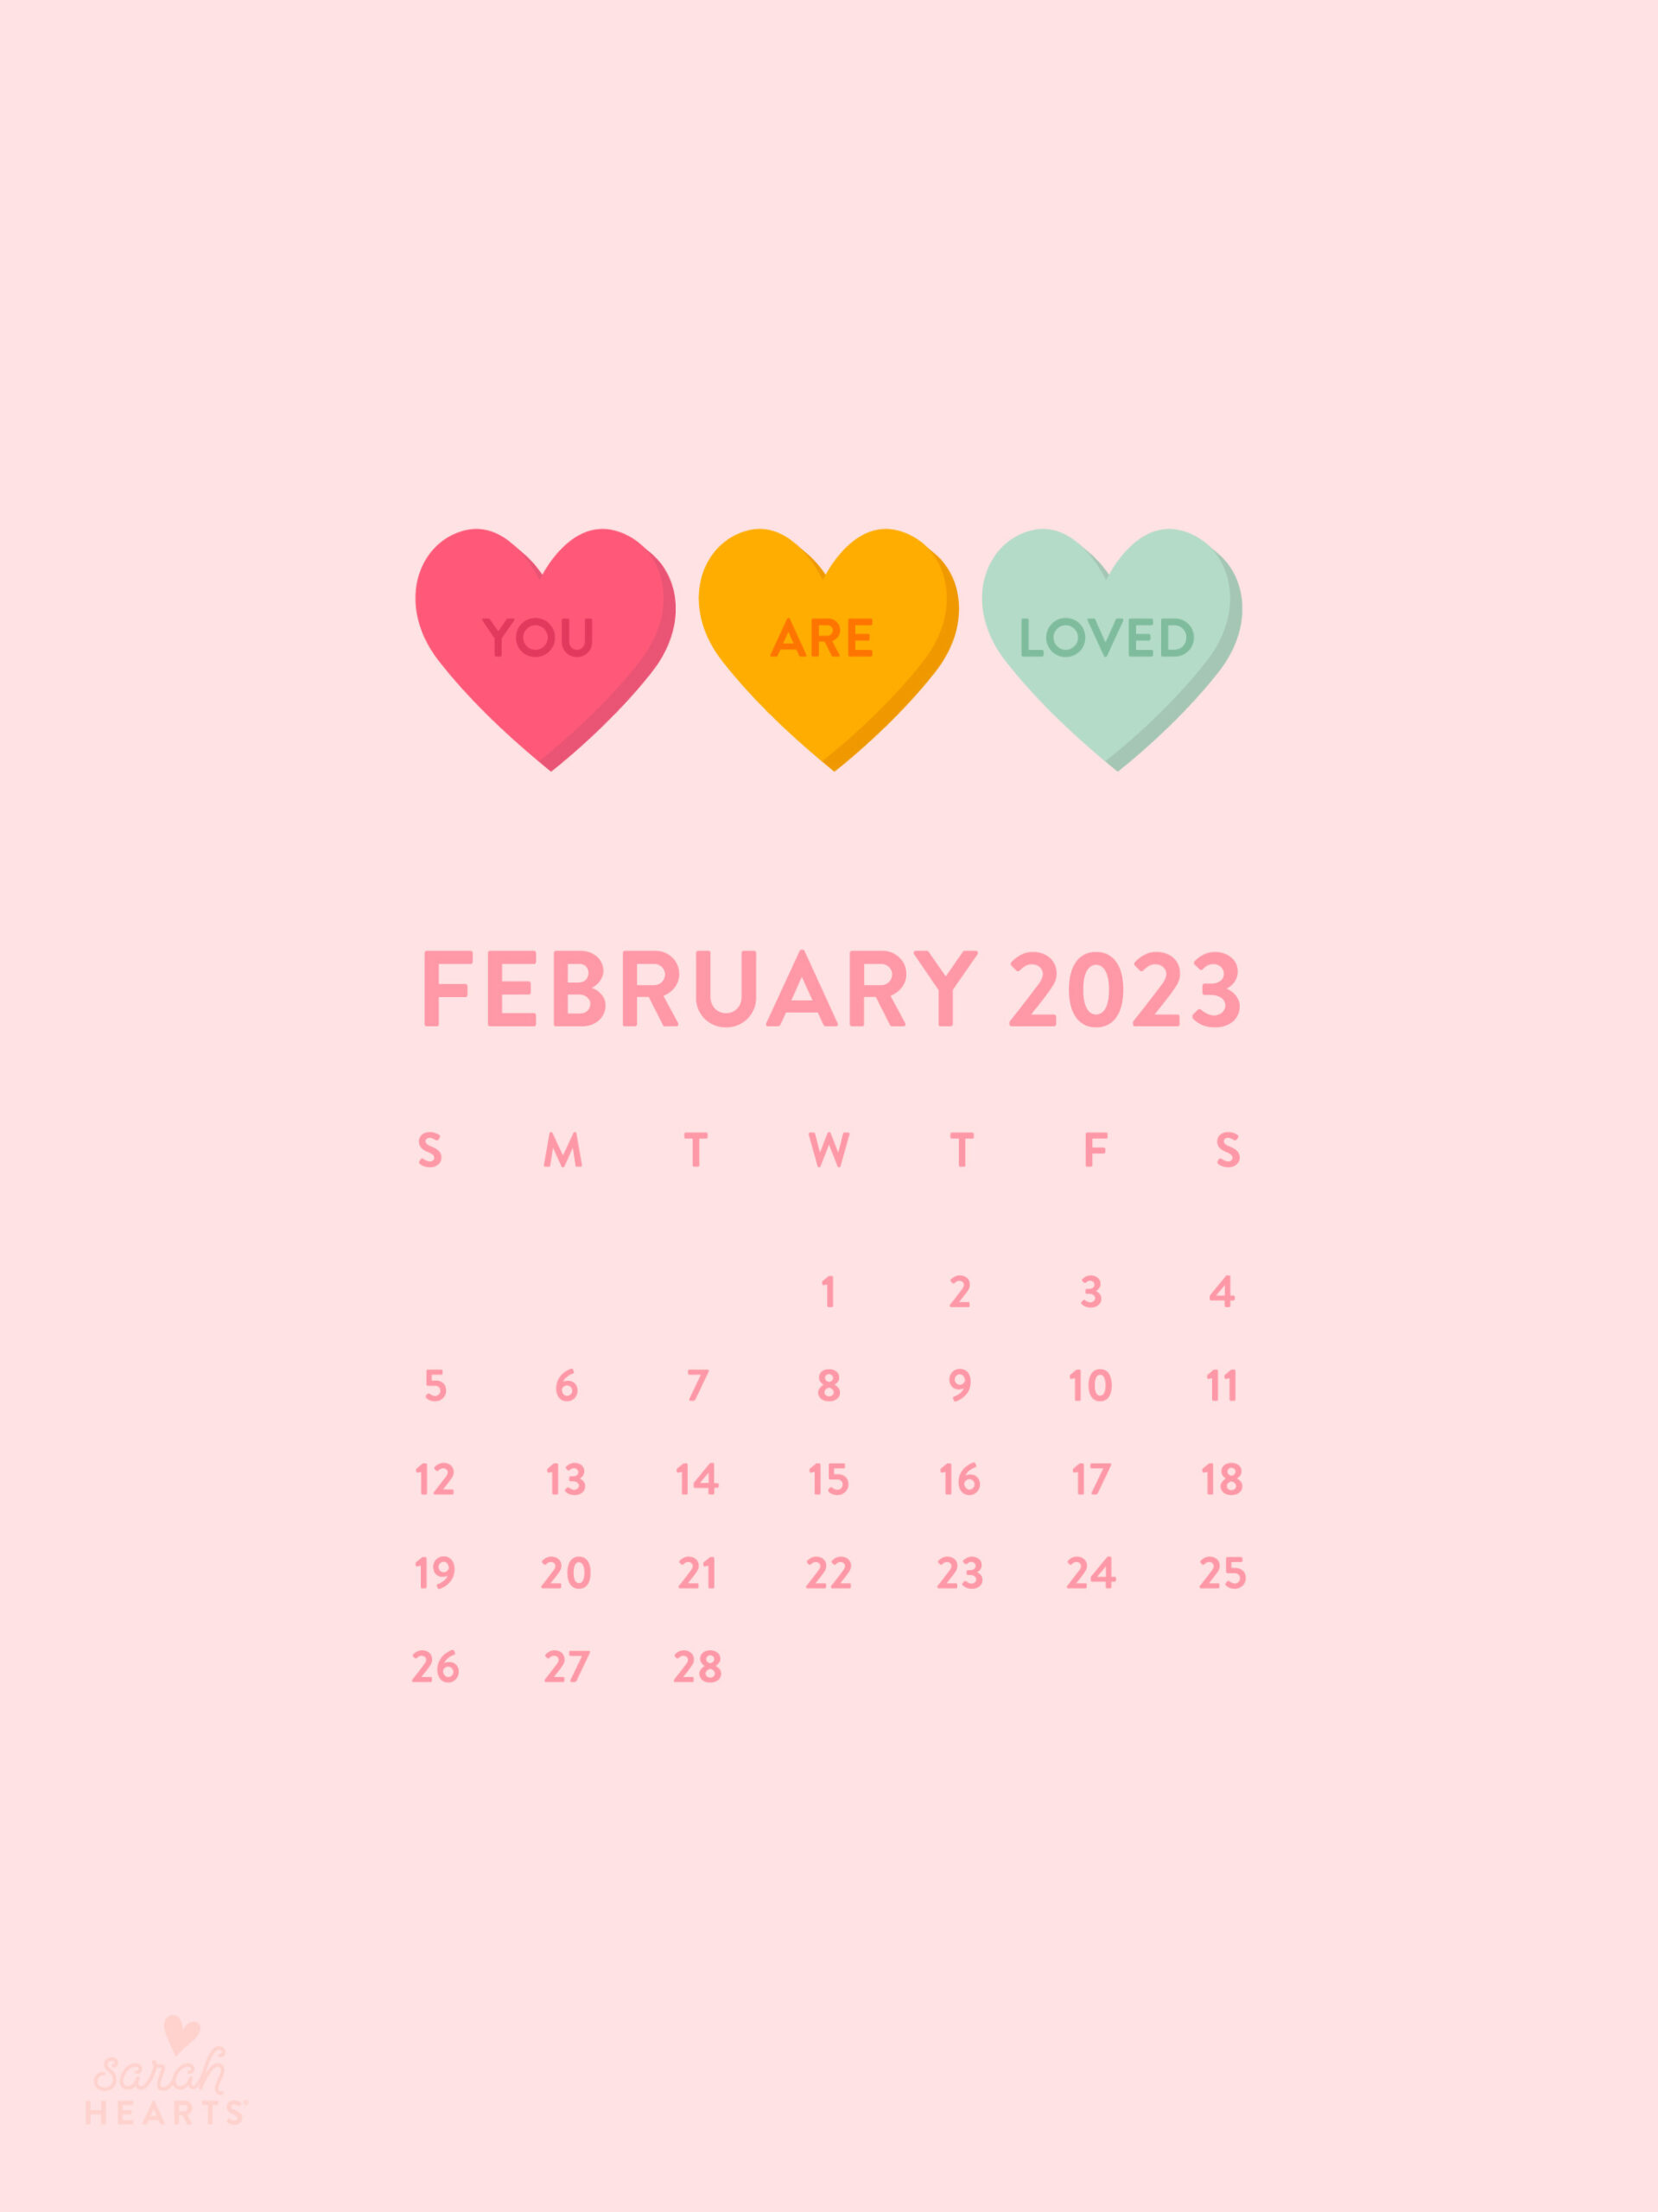 February 2023 Calendar Wallpaper - Sarah Hearts